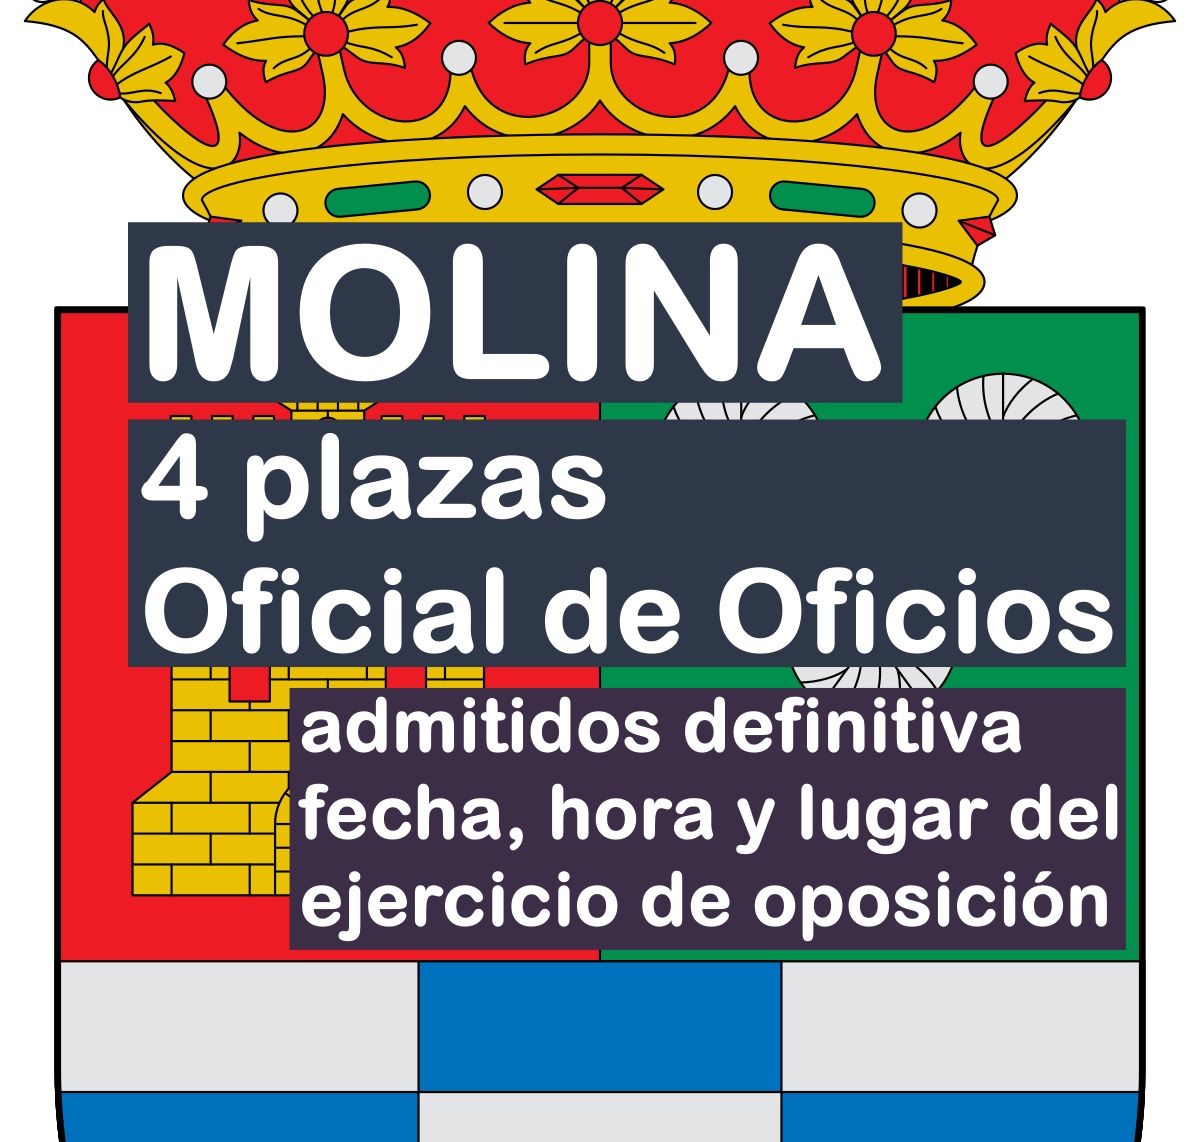 4 plazas Oficial de Oficios en Molina